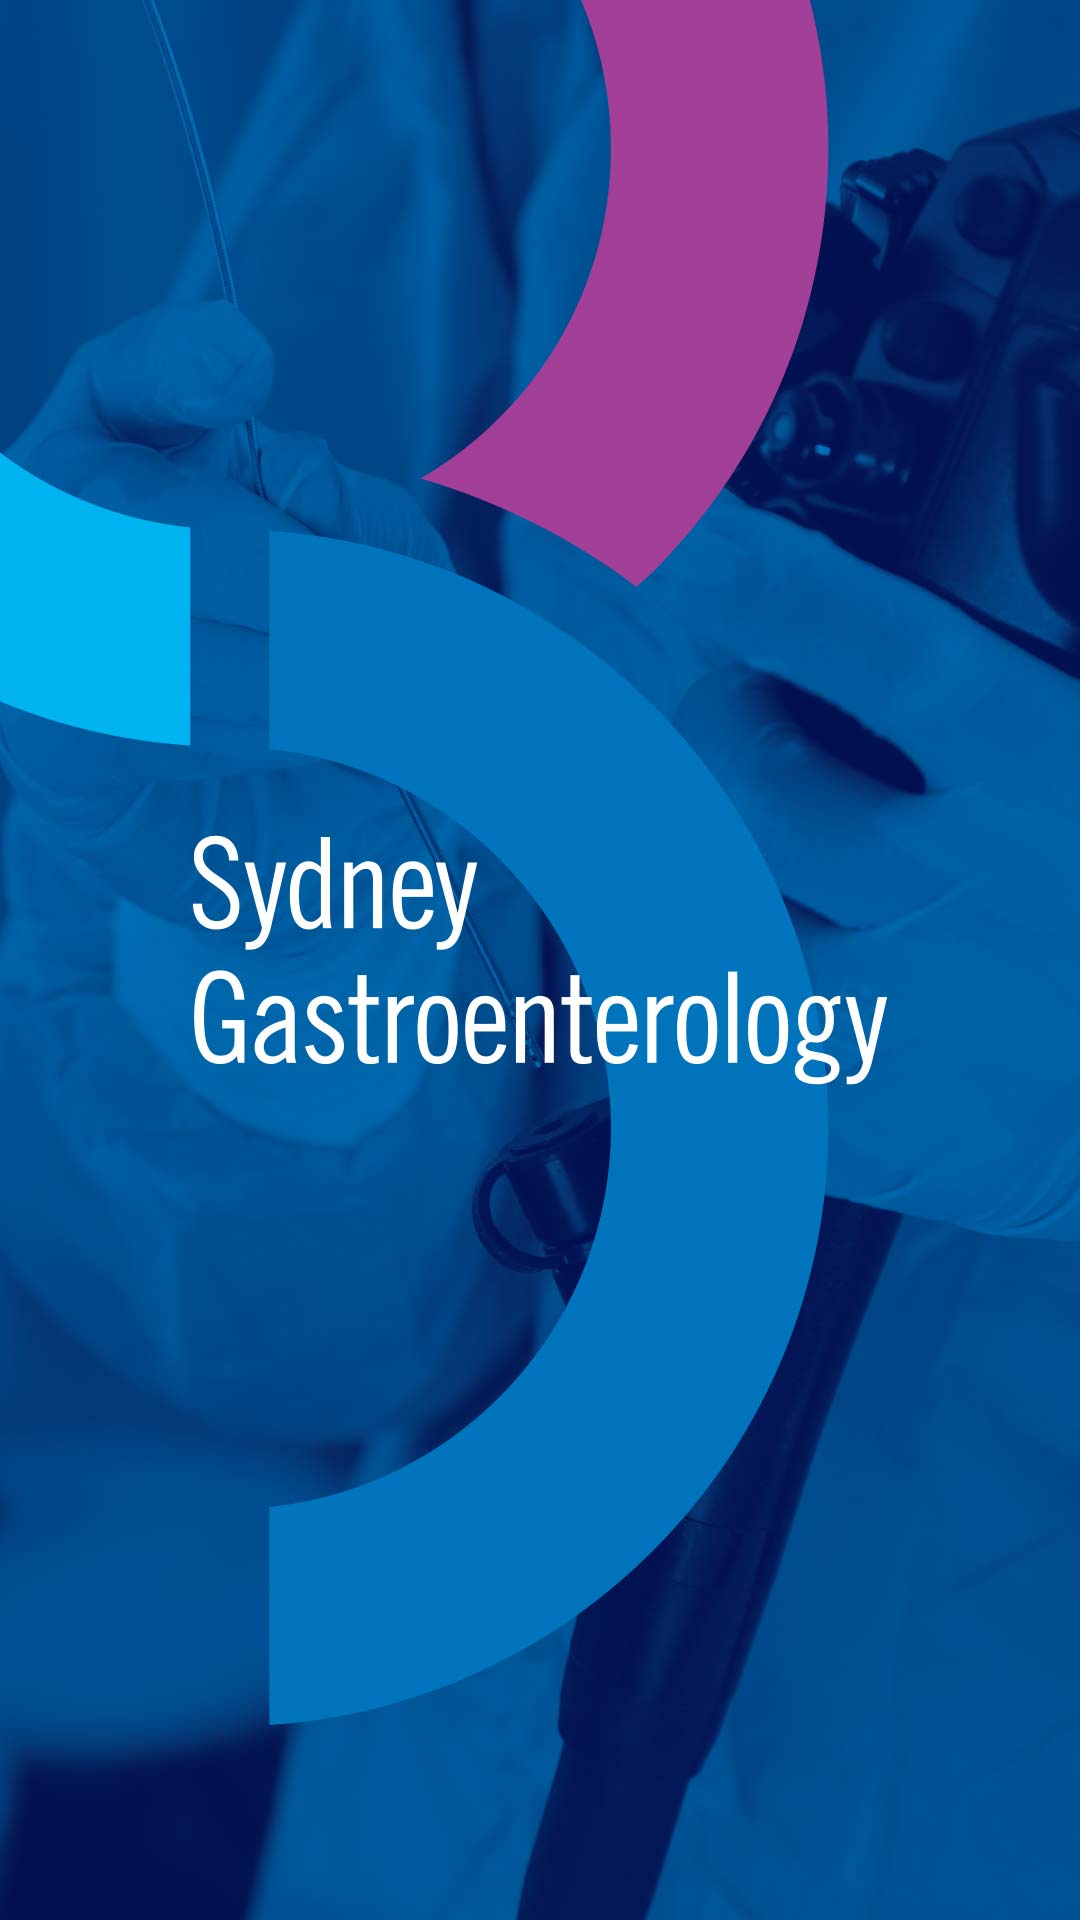 Sydney Gastroenterology Medical Design Case Study